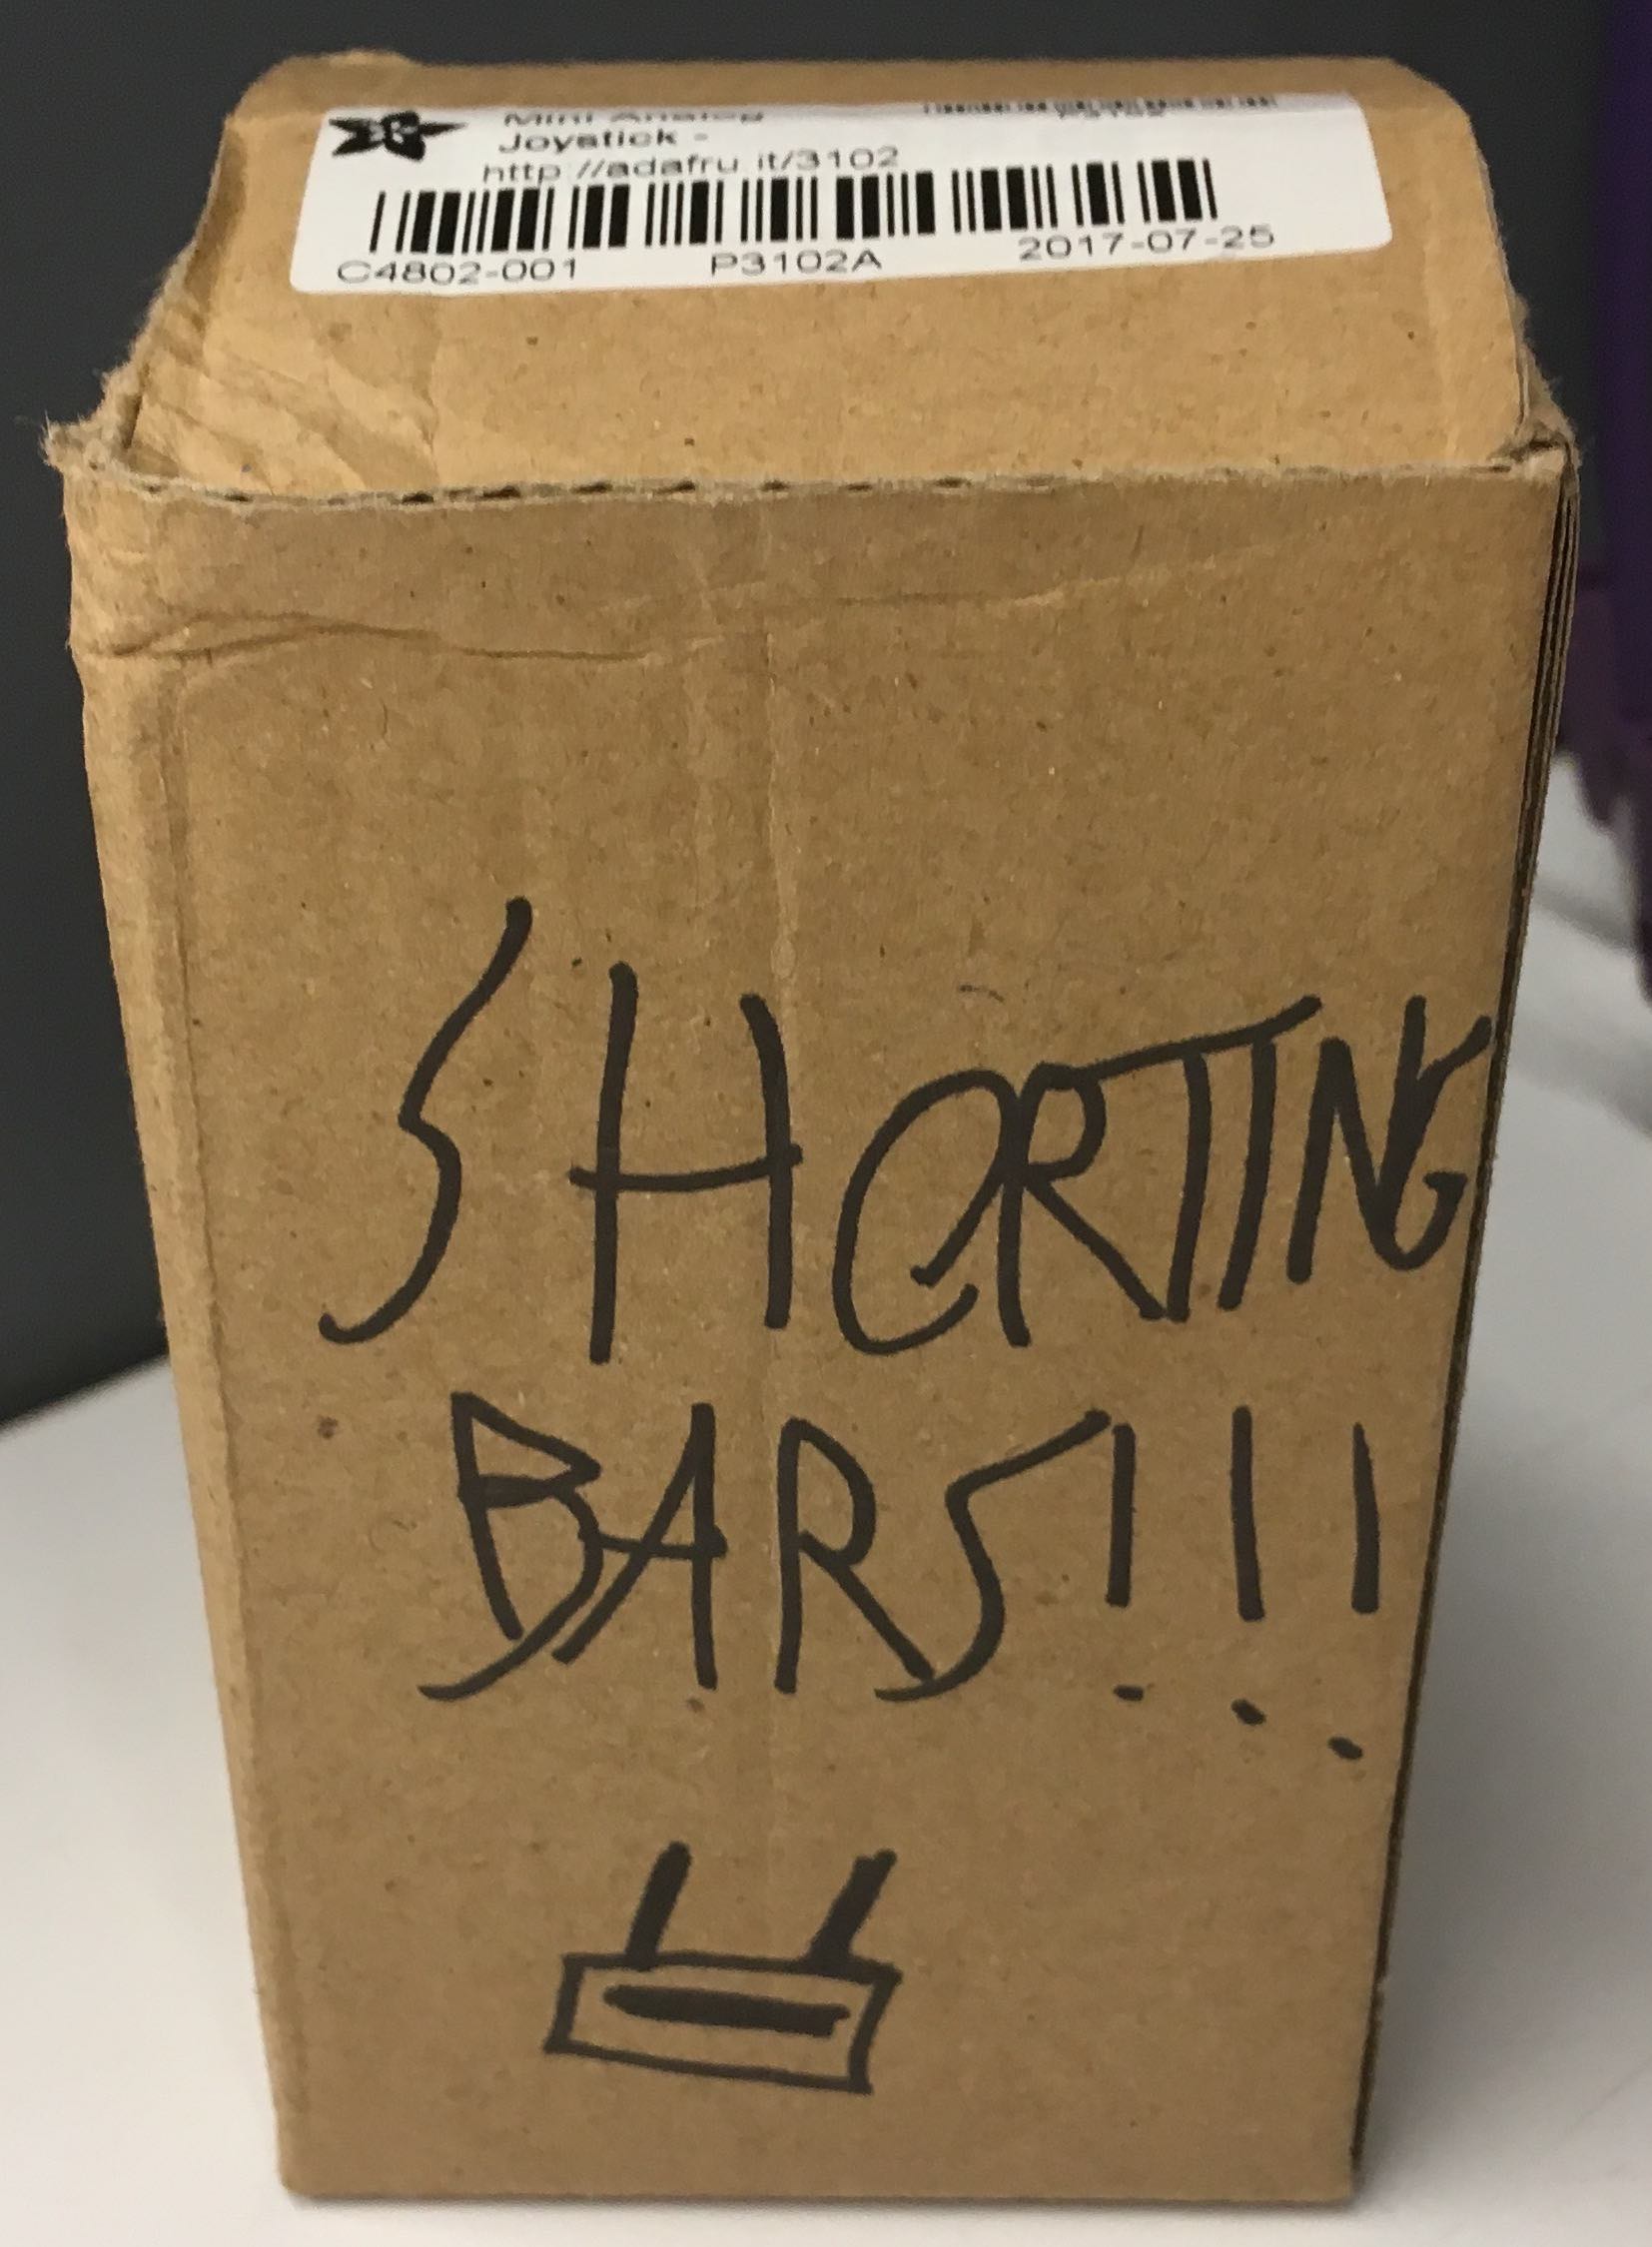 Box of shorting bars